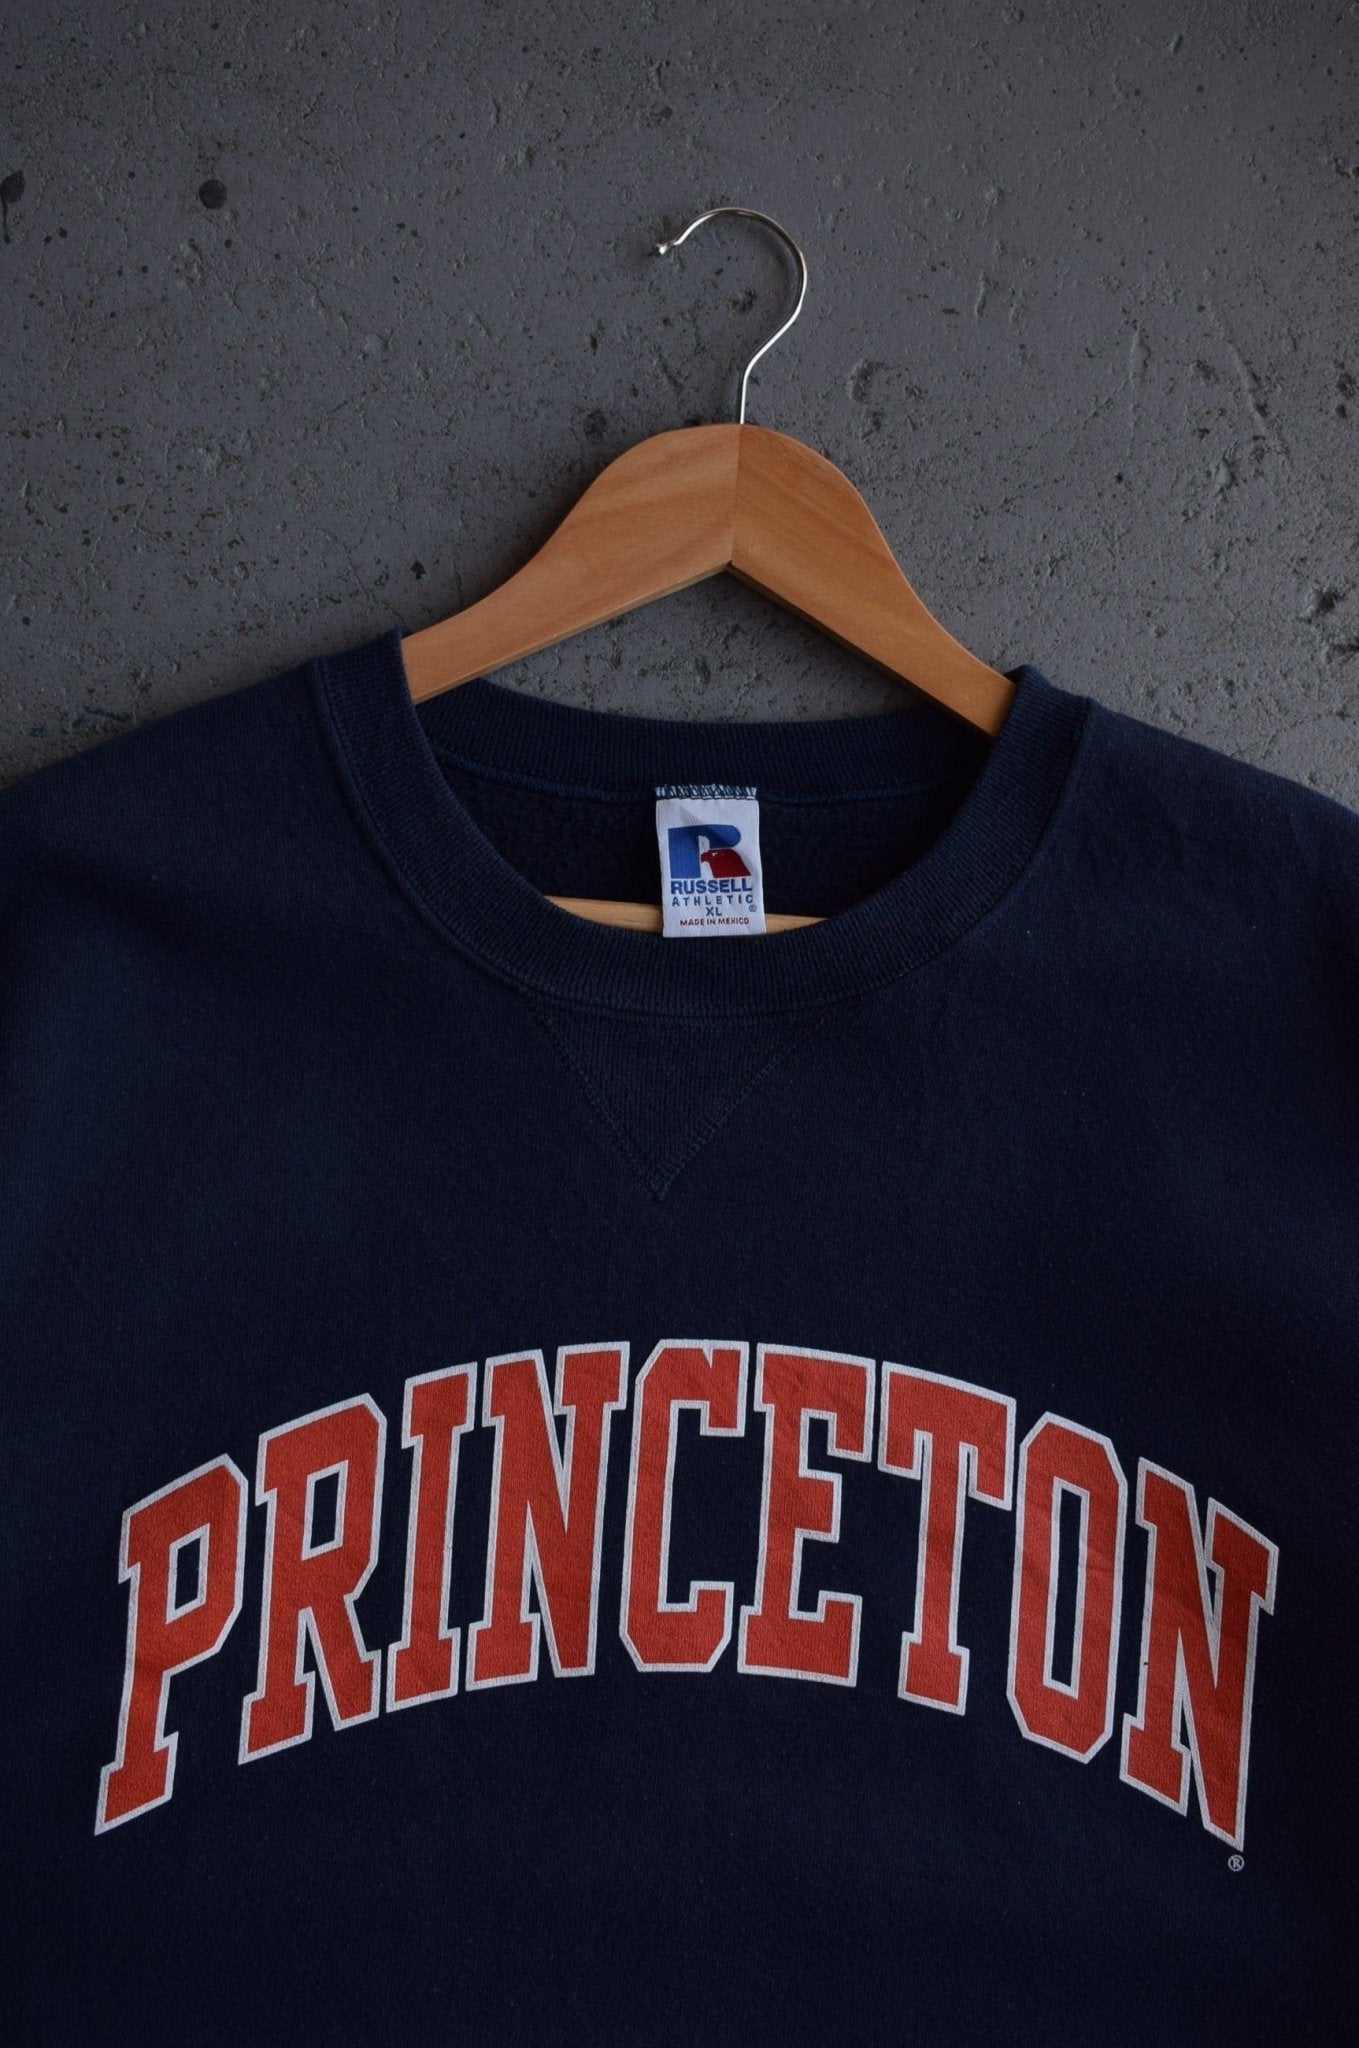 Vintage Russell Athletic x Princeton University Crewneck (XL) - Retrospective Store